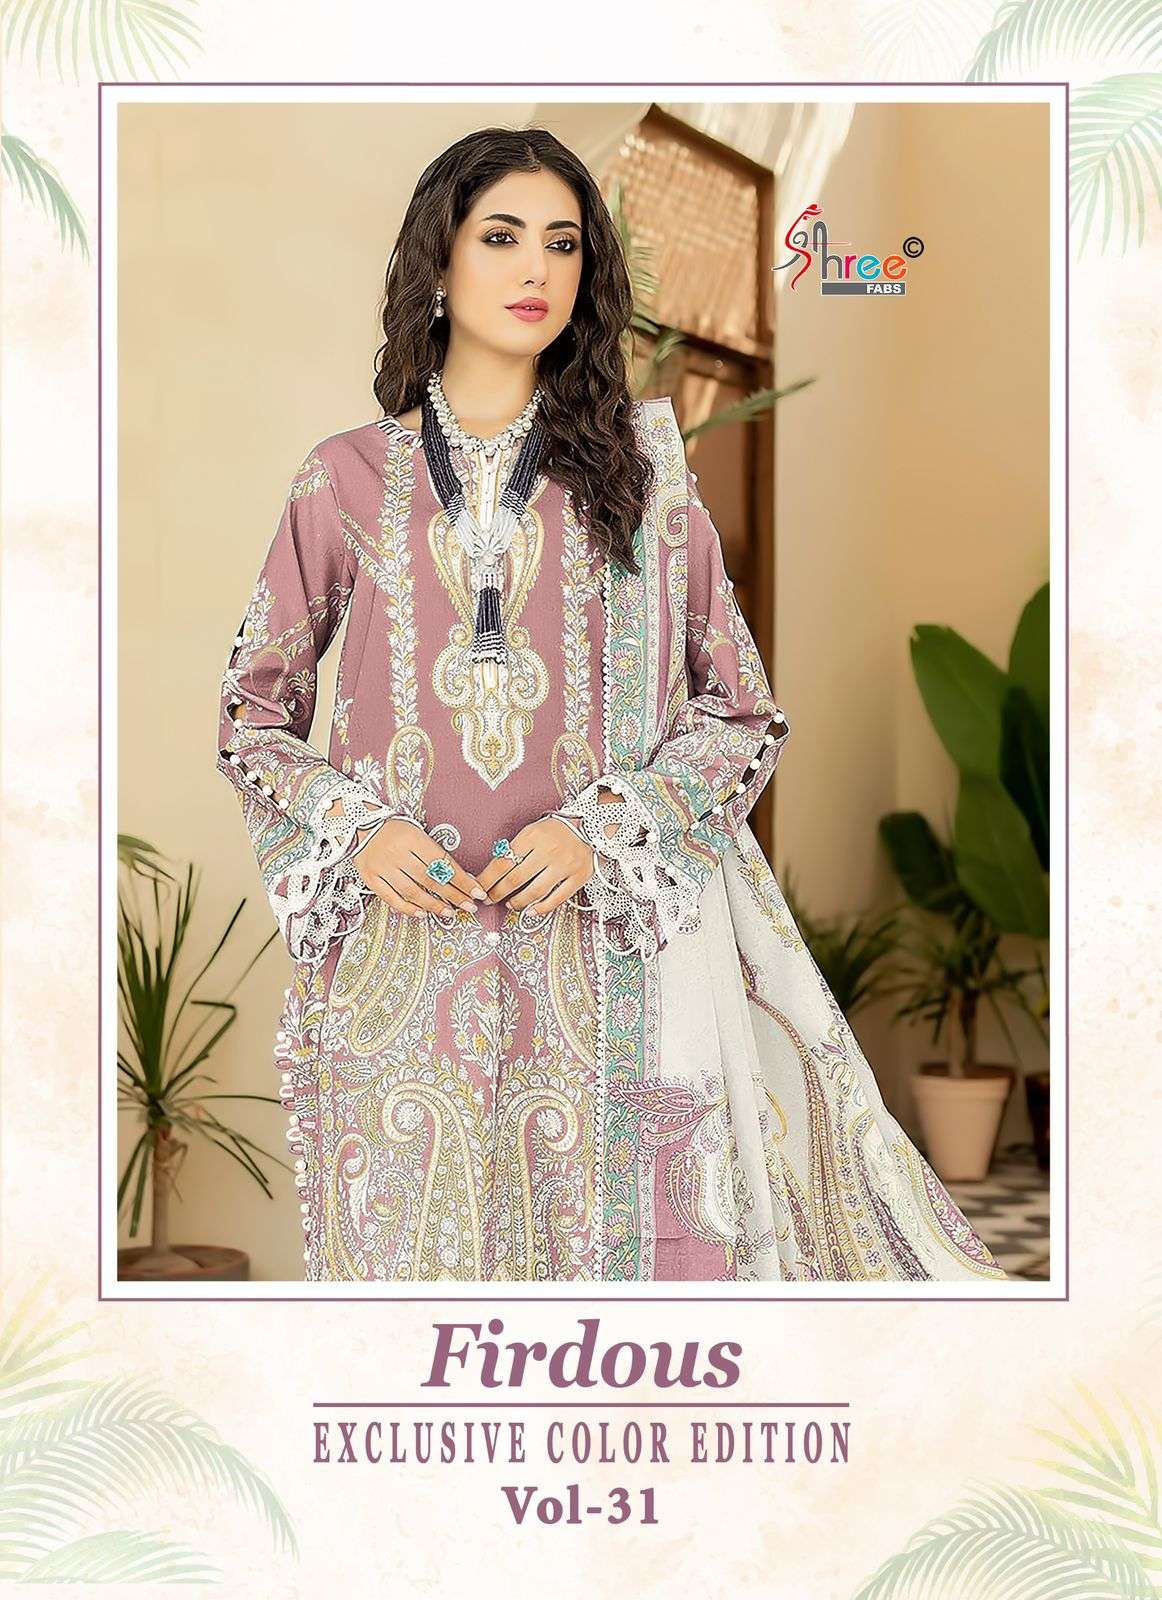 shree fabs by firdous exclsuive collection vol 31 3311 colour edition party wear cotton pakistani suits dealer 